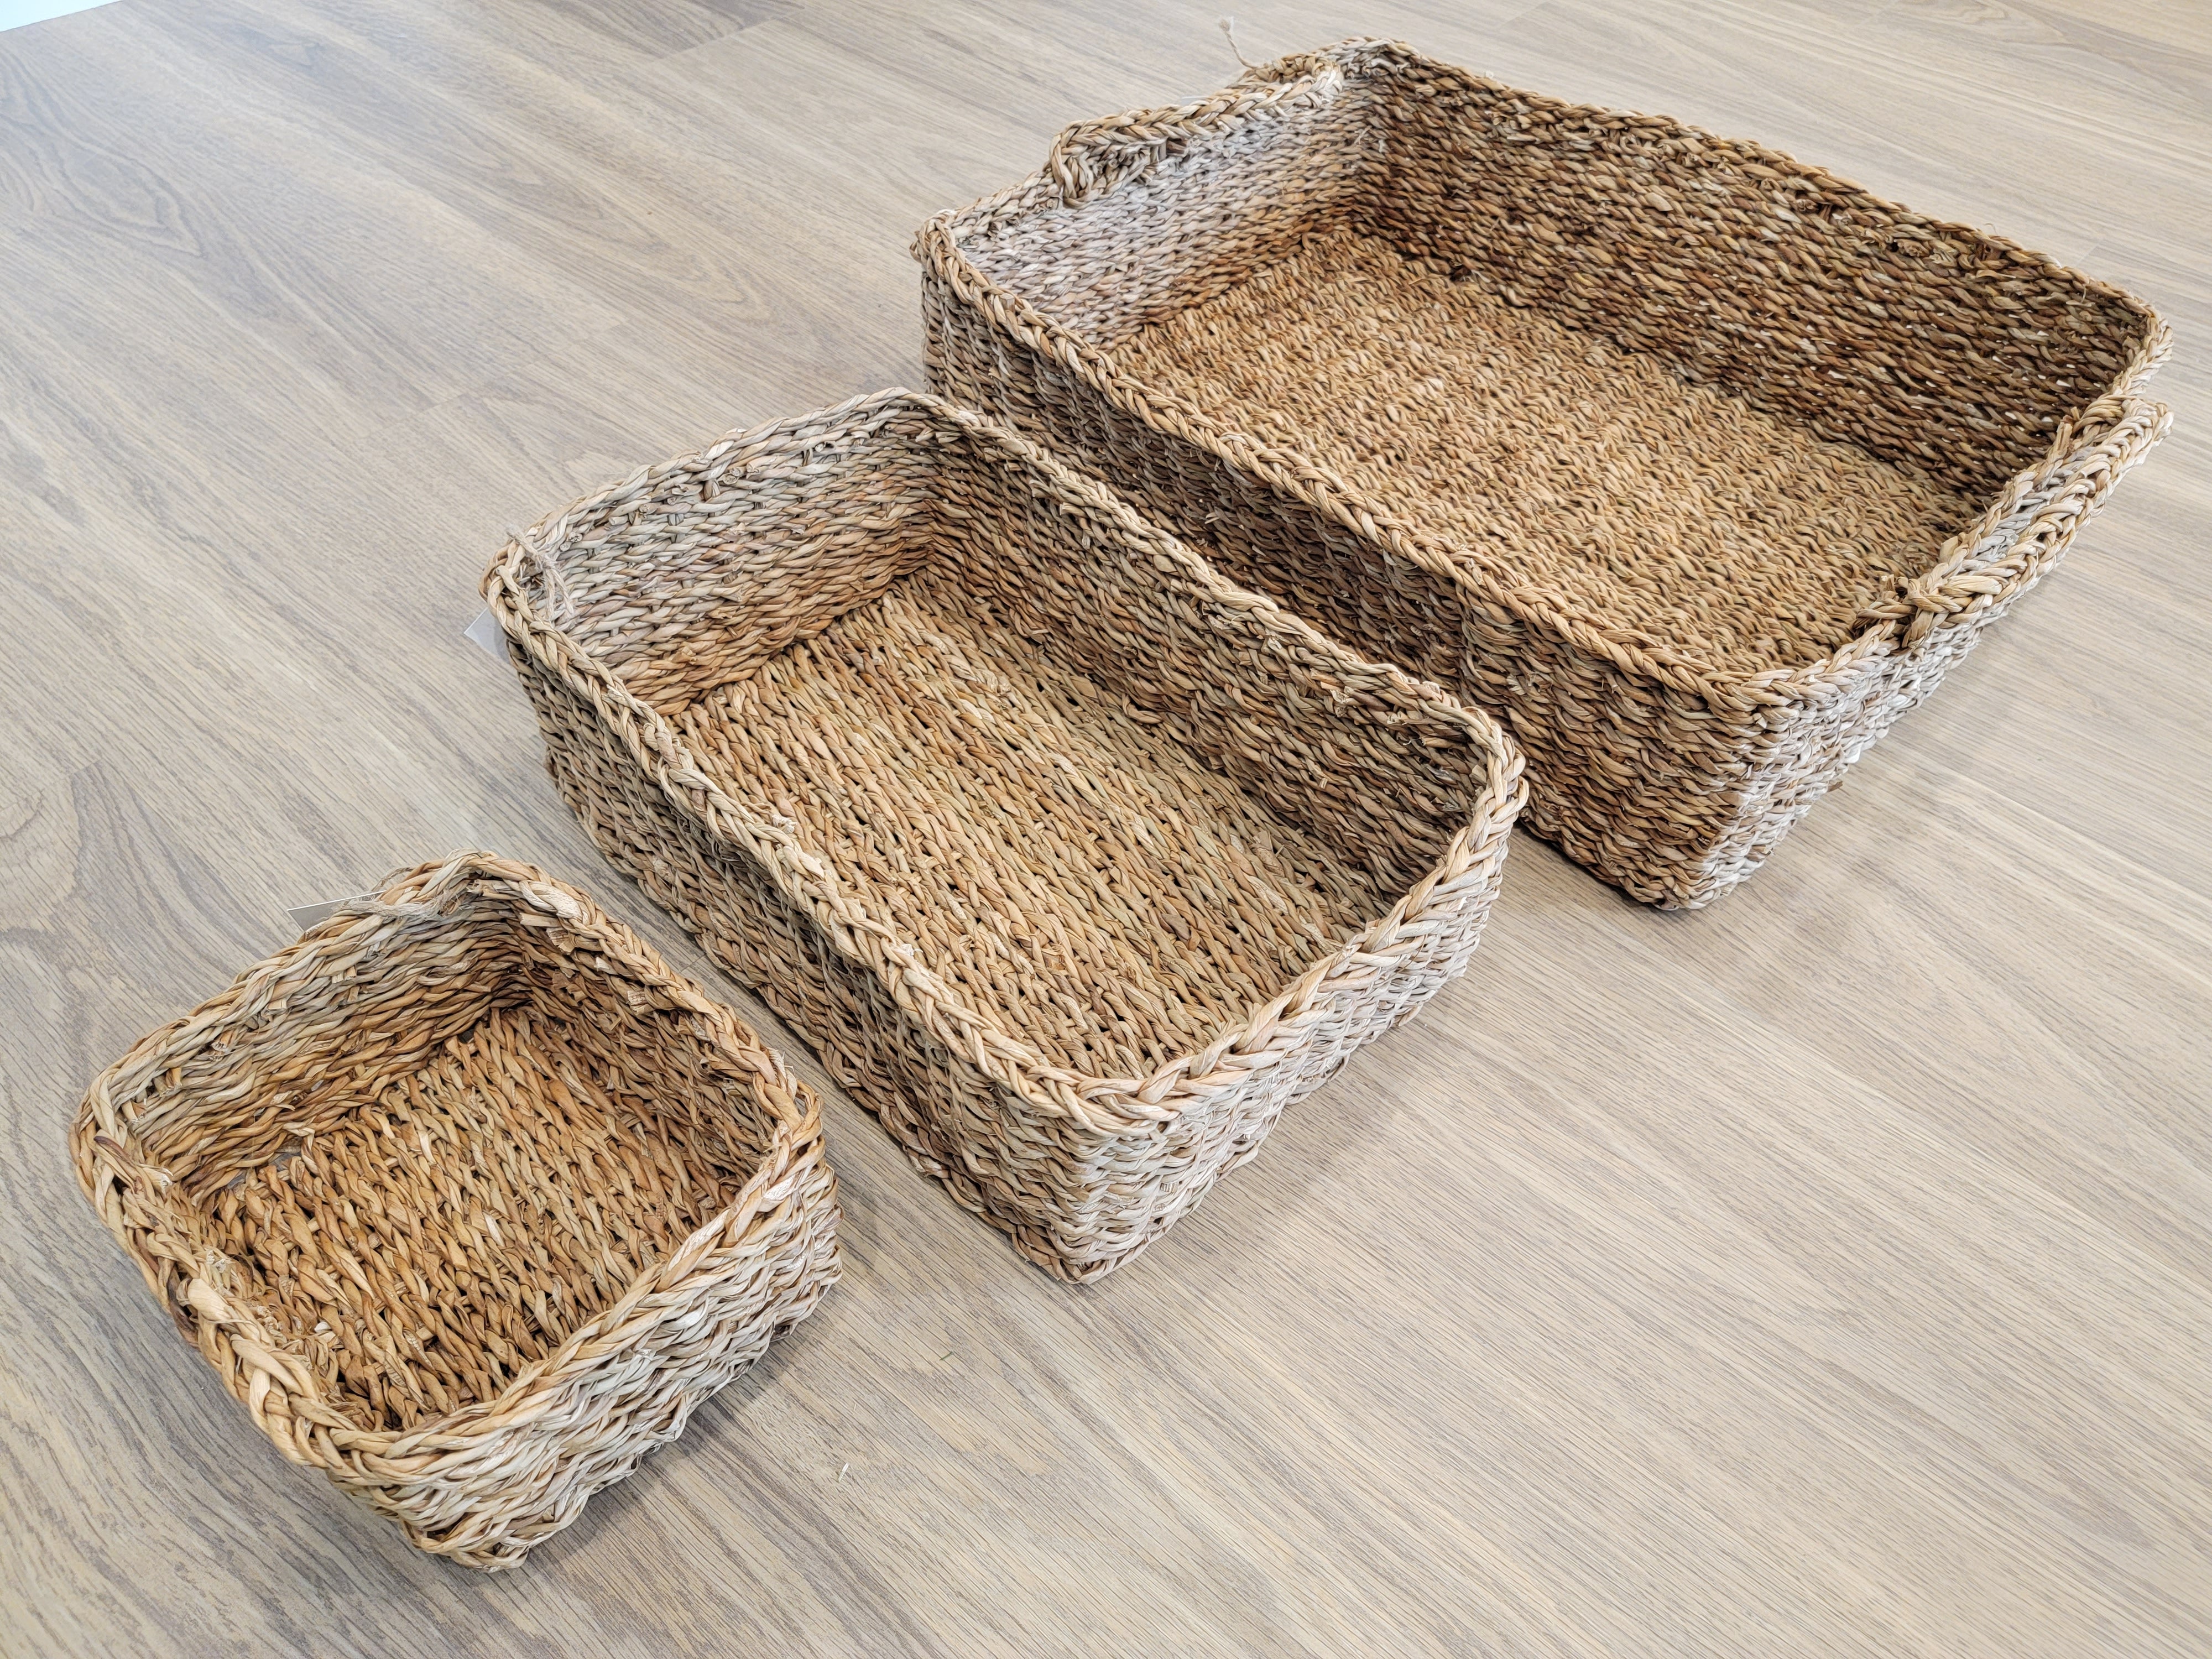 Handwoven baskets (3 sizes)